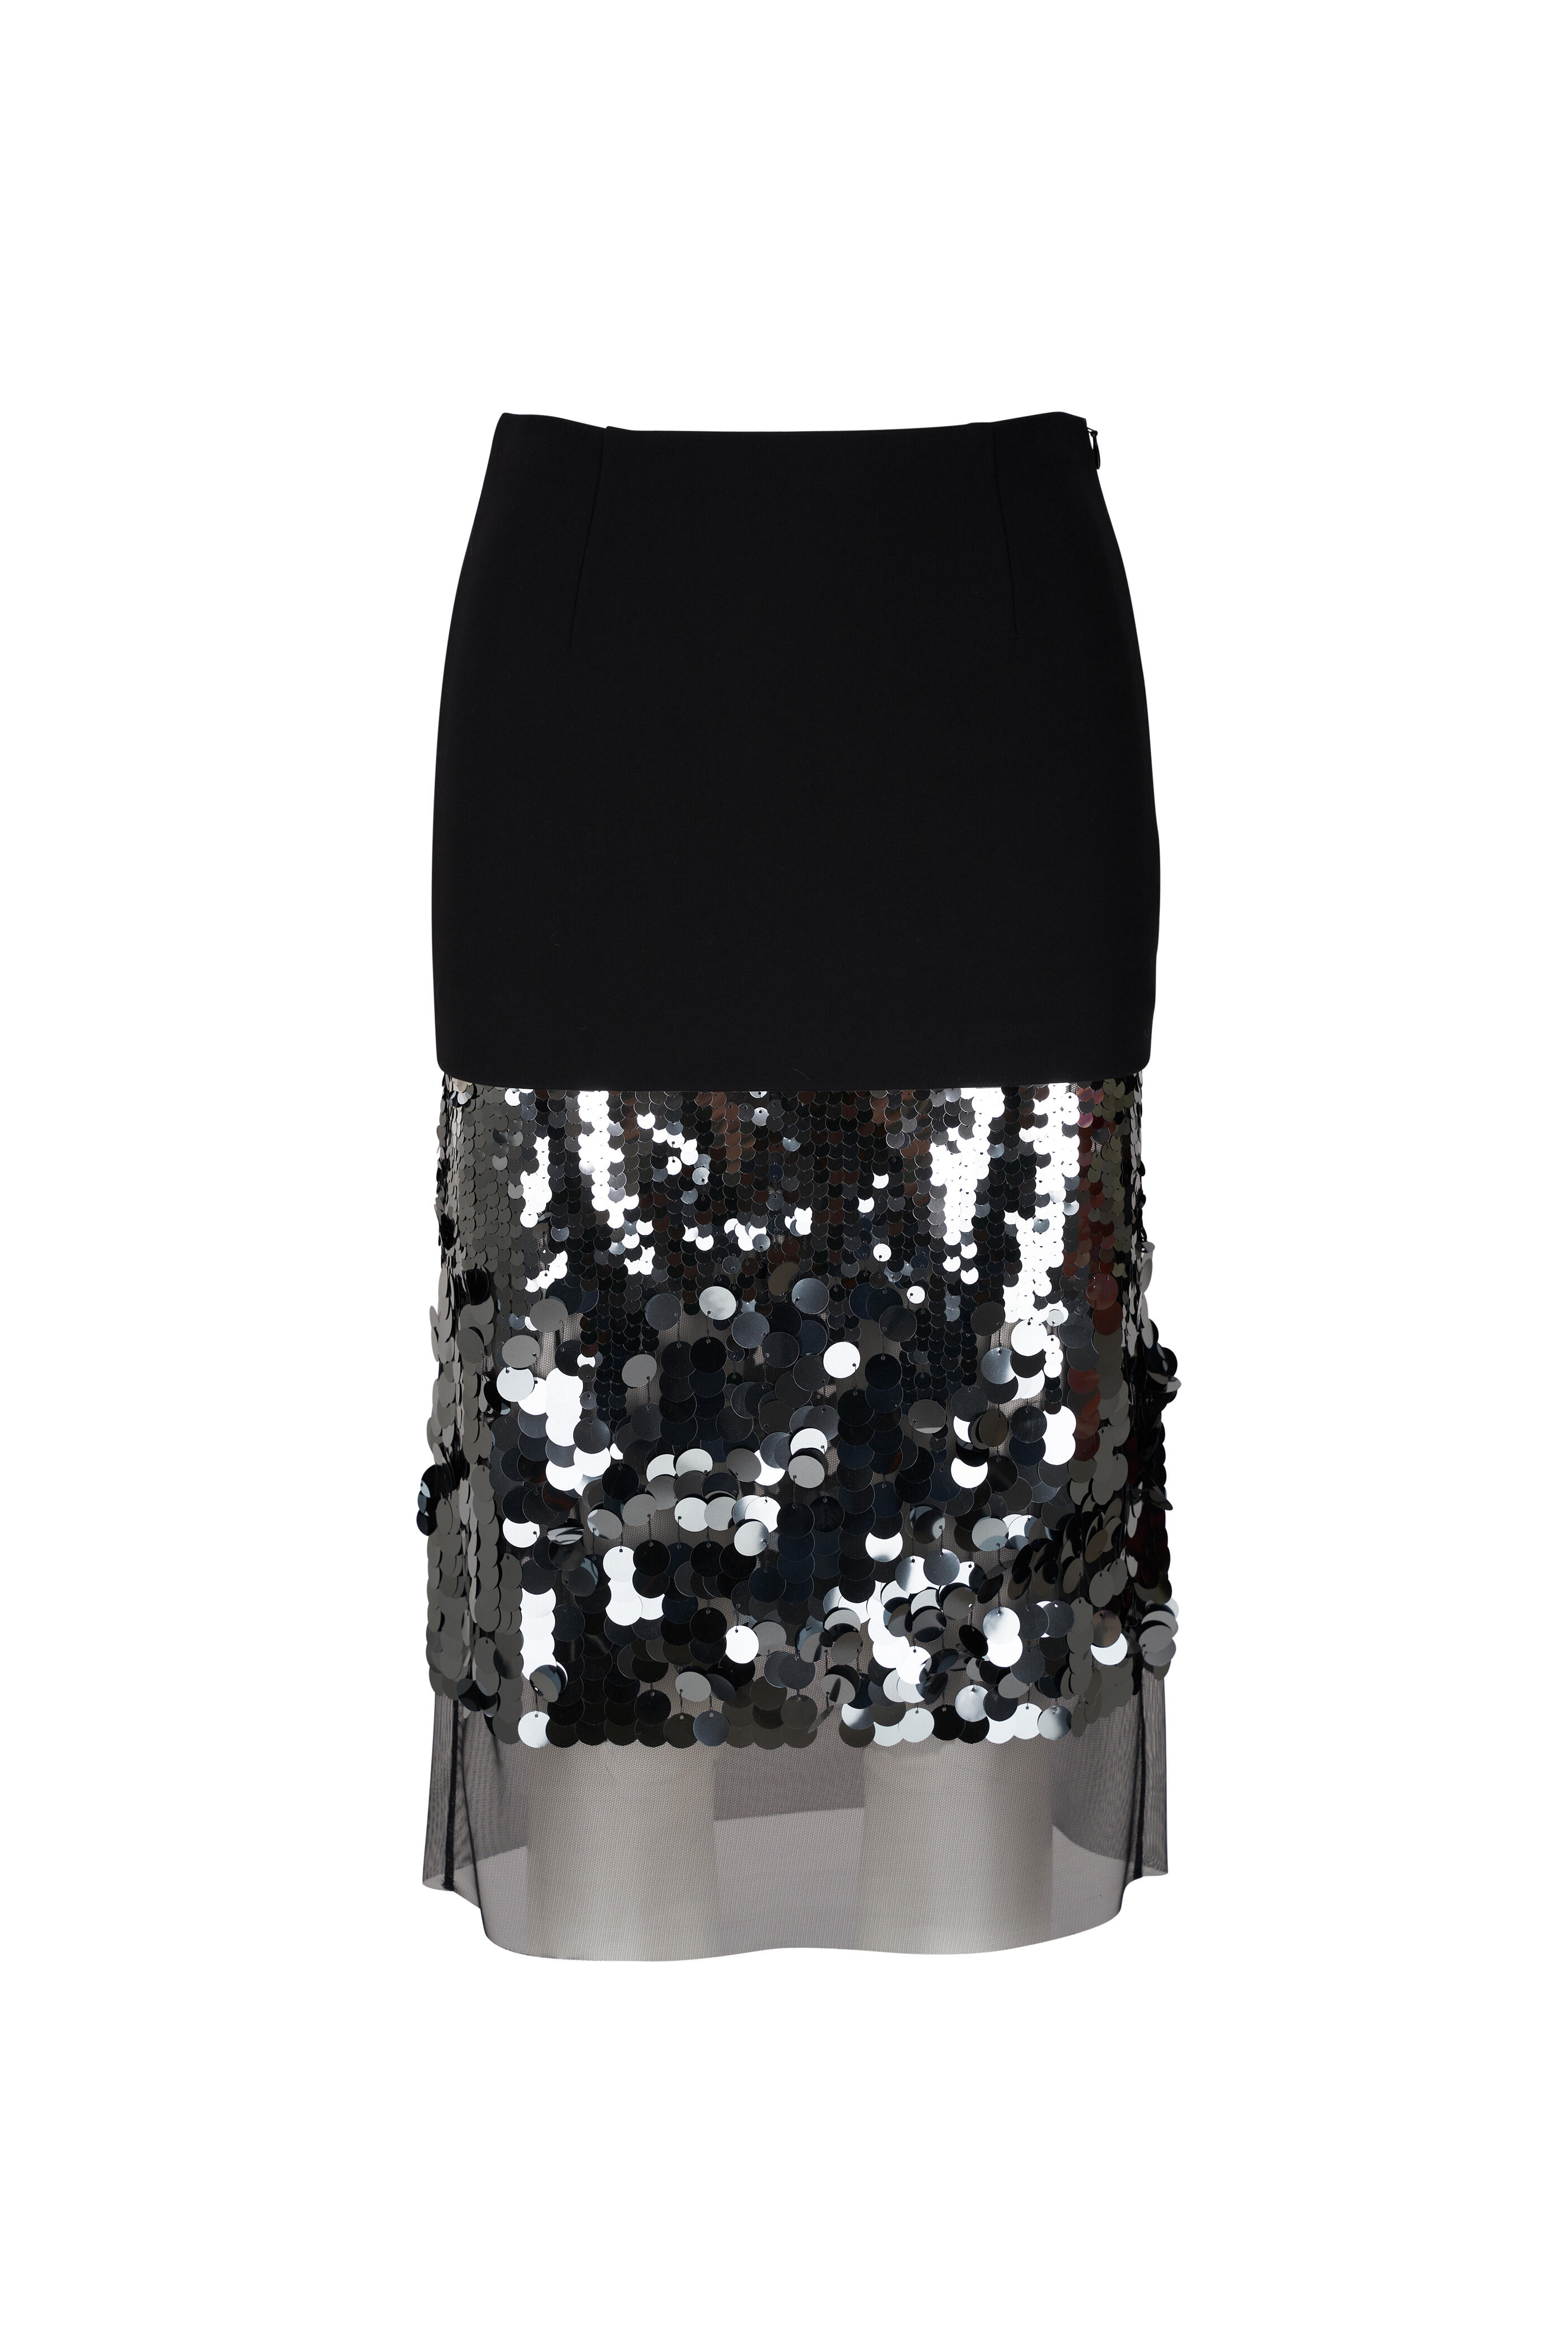 Dorothee Schumacher - Pure Black & Silver Sequin Midi Skirt